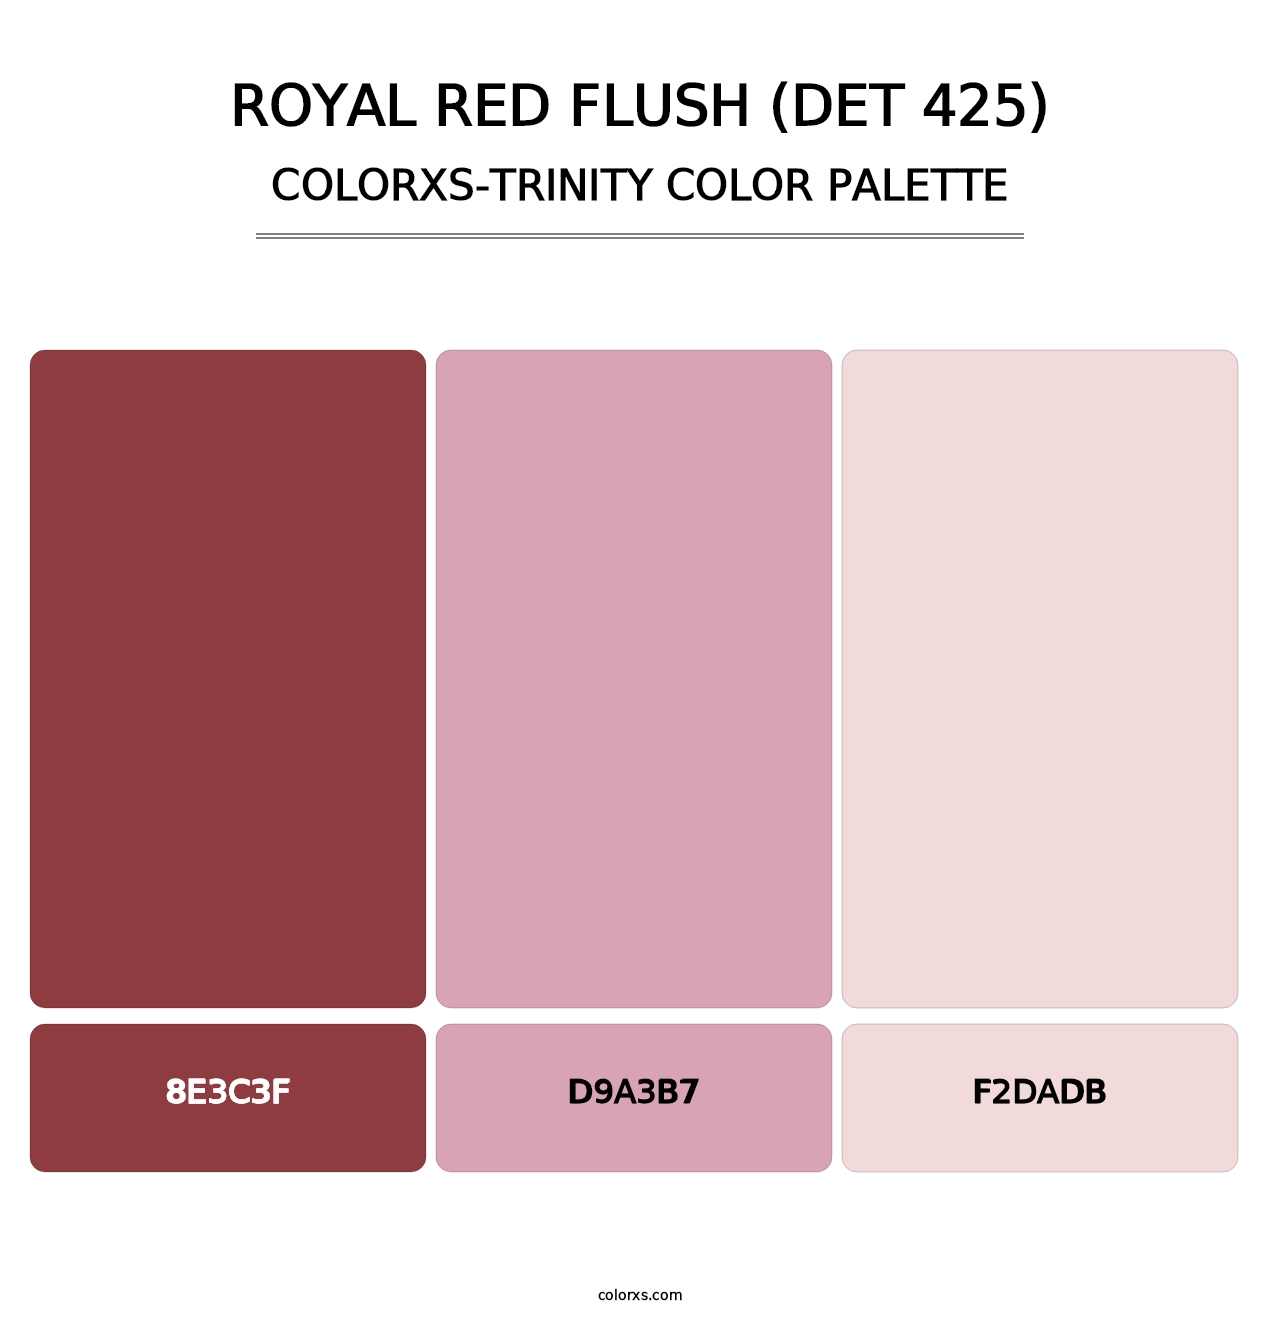 Royal Red Flush (DET 425) - Colorxs Trinity Palette